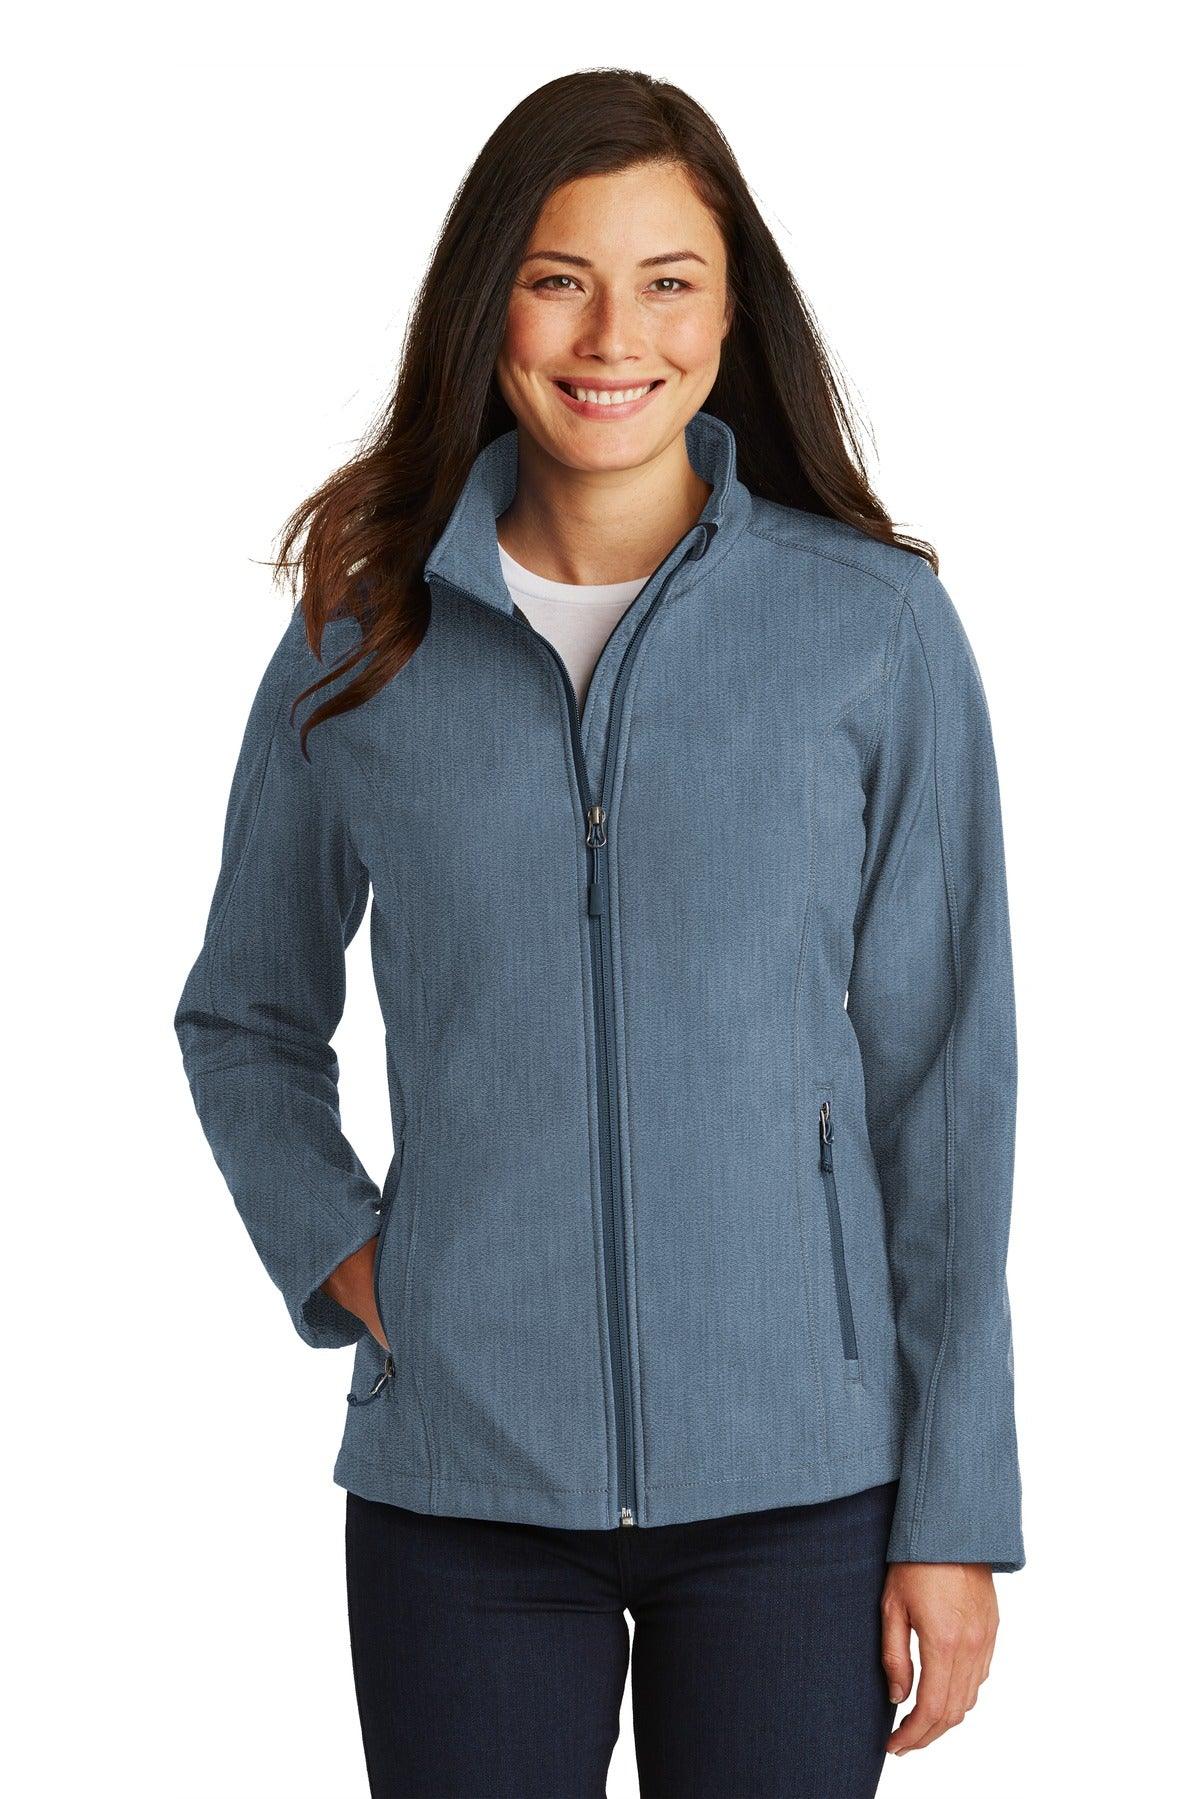 Port Authority Ladies Core Soft Shell Jacket. L317 - Dresses Max